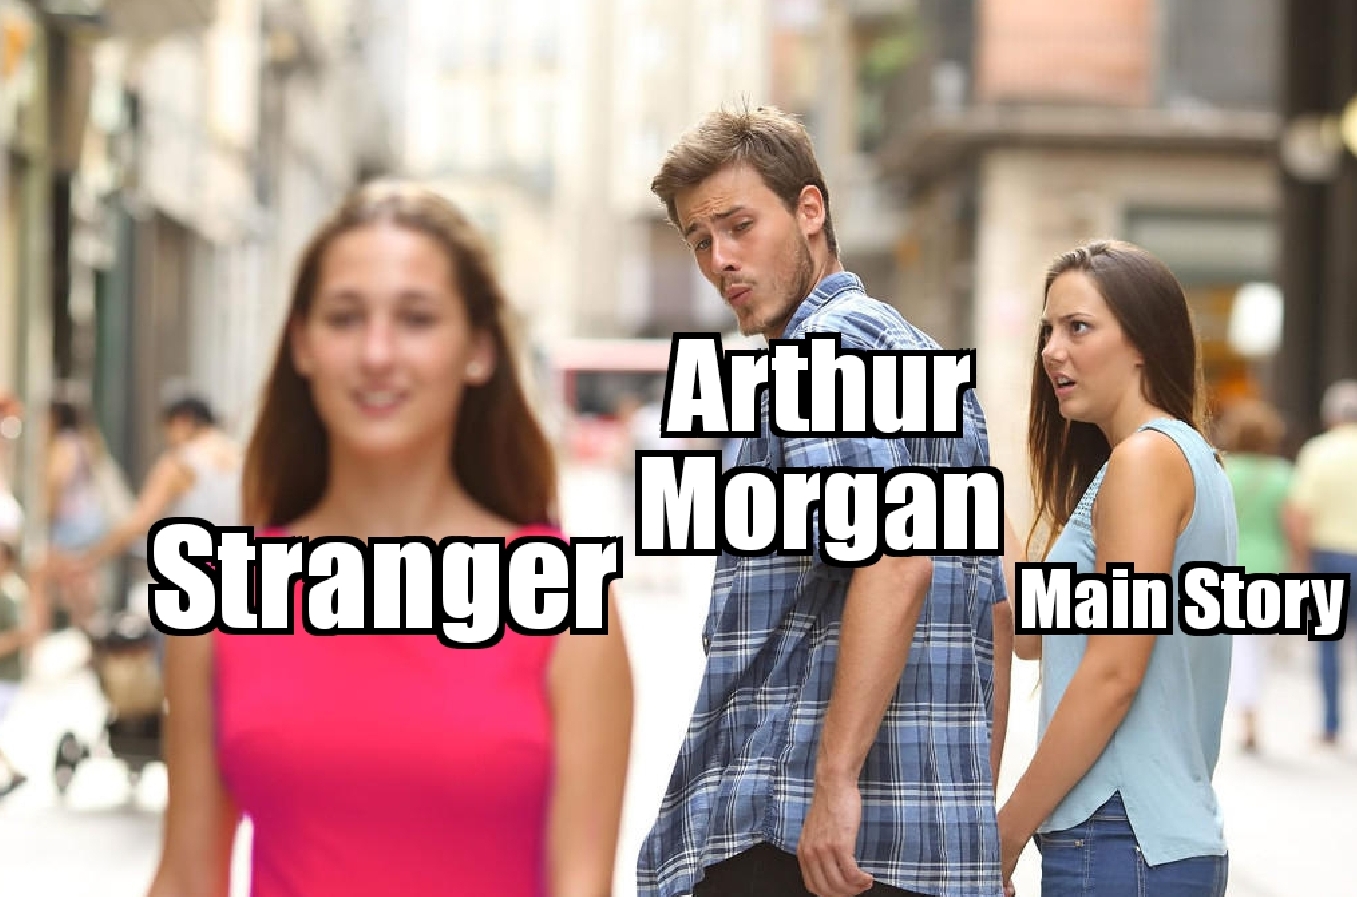 quackityhq meme - Arthur Stranger Morgan Main Story